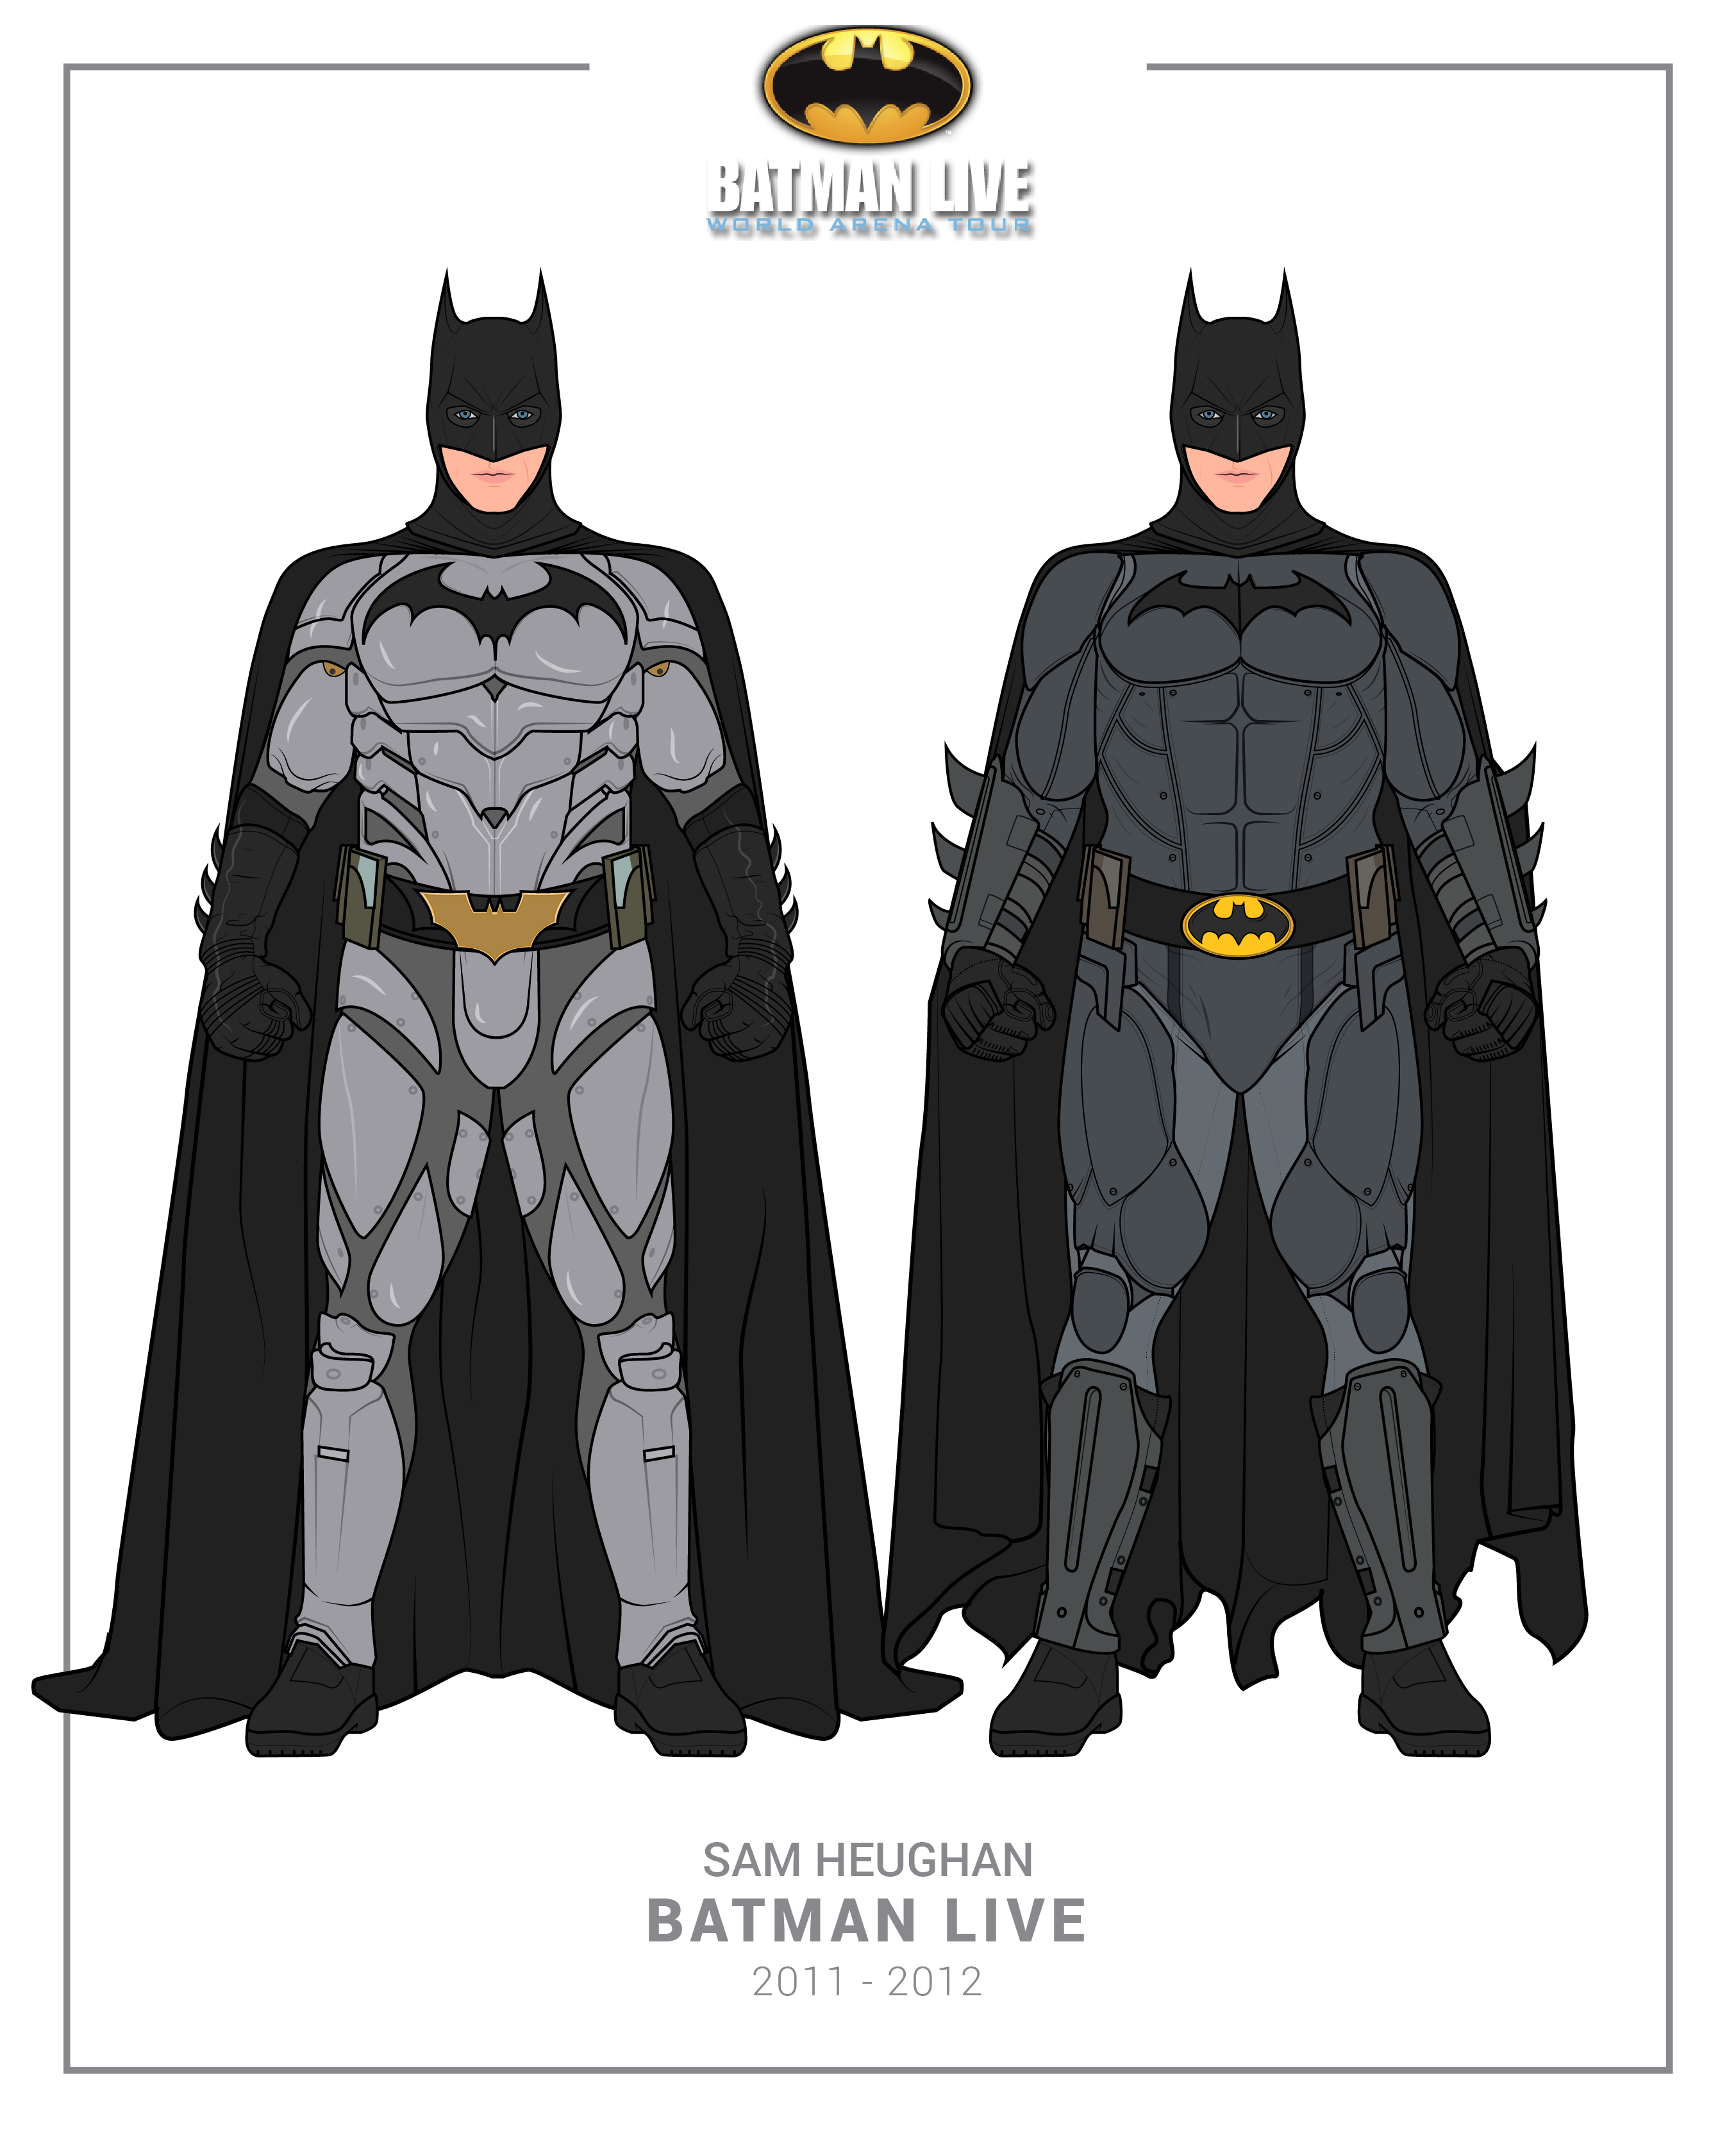 Batman Live (2011-2012) by efrajoey1 on DeviantArt